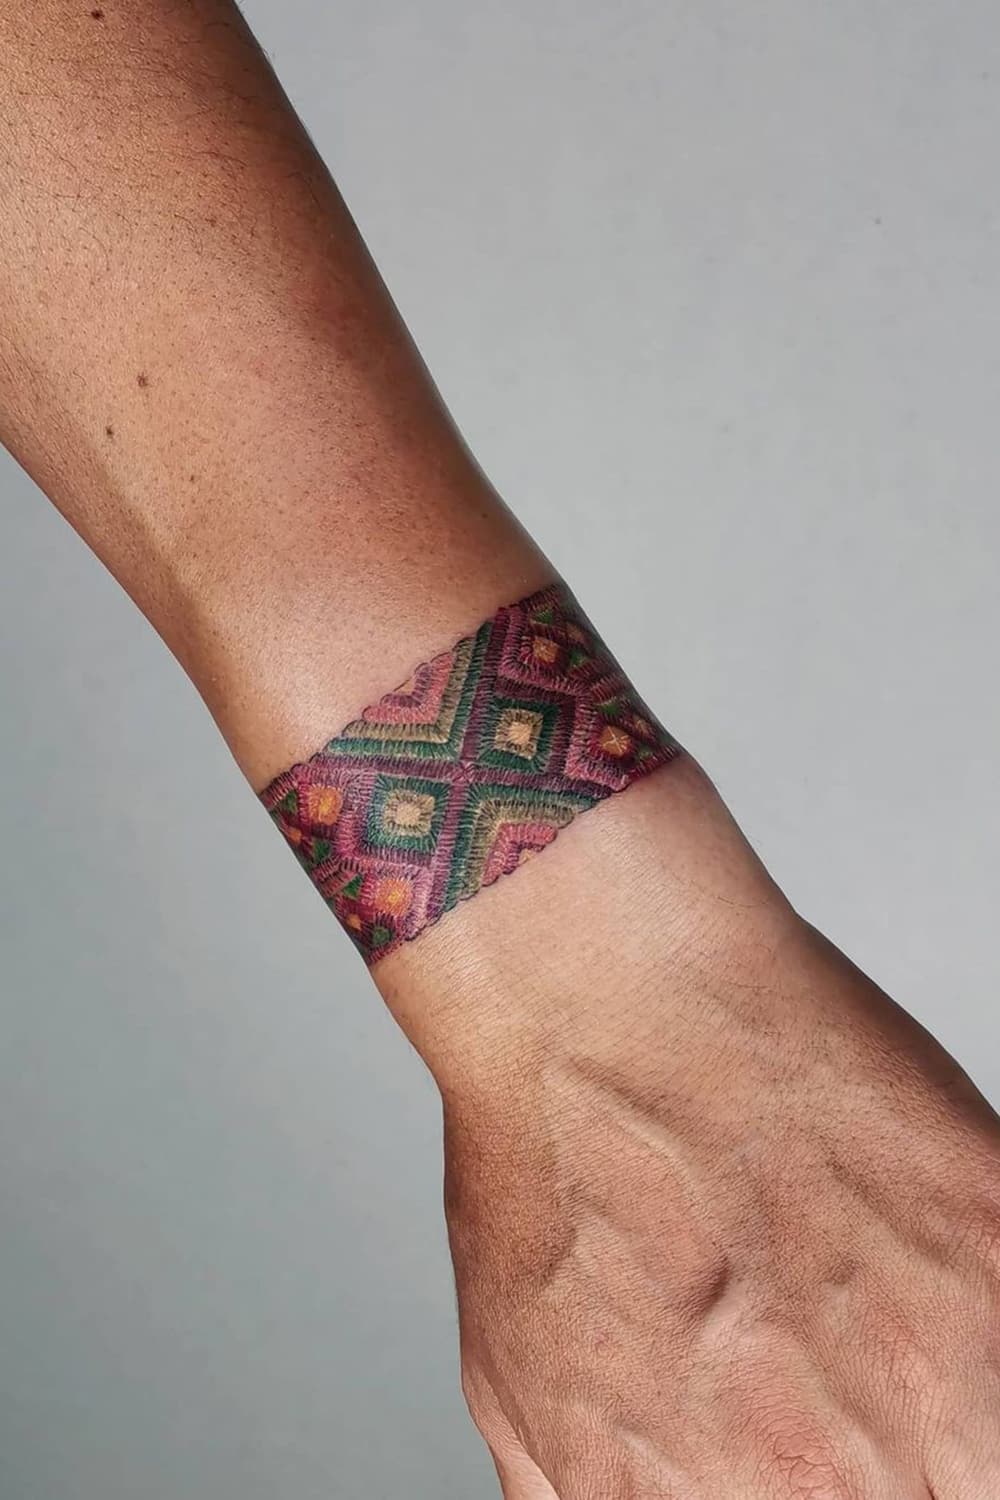 Tribal armband tattoo